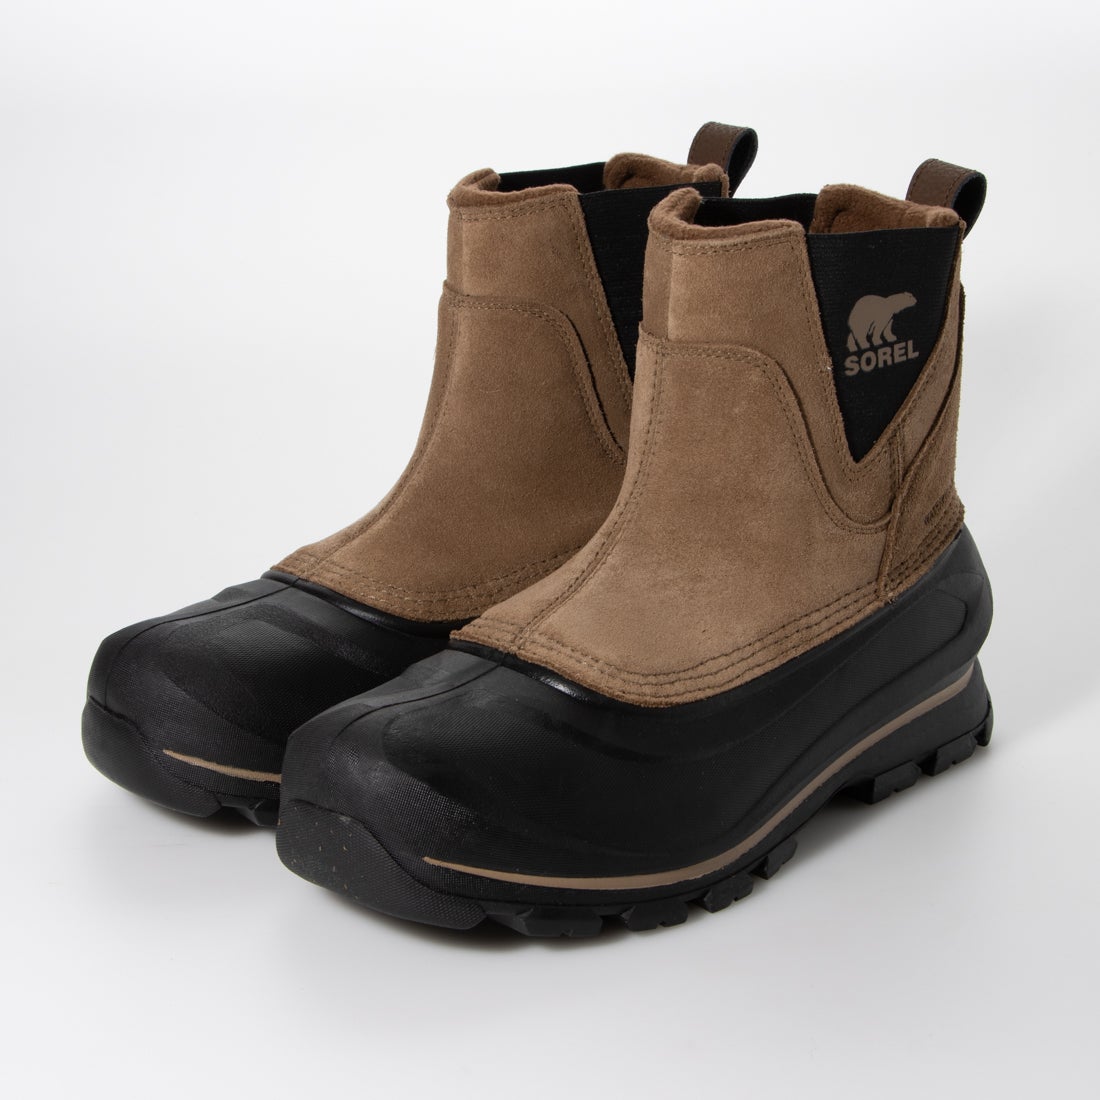 SOREL/ソレル BUXTON PULL ON メンズ ブーツ 防水 雨雪対応 NM2738 